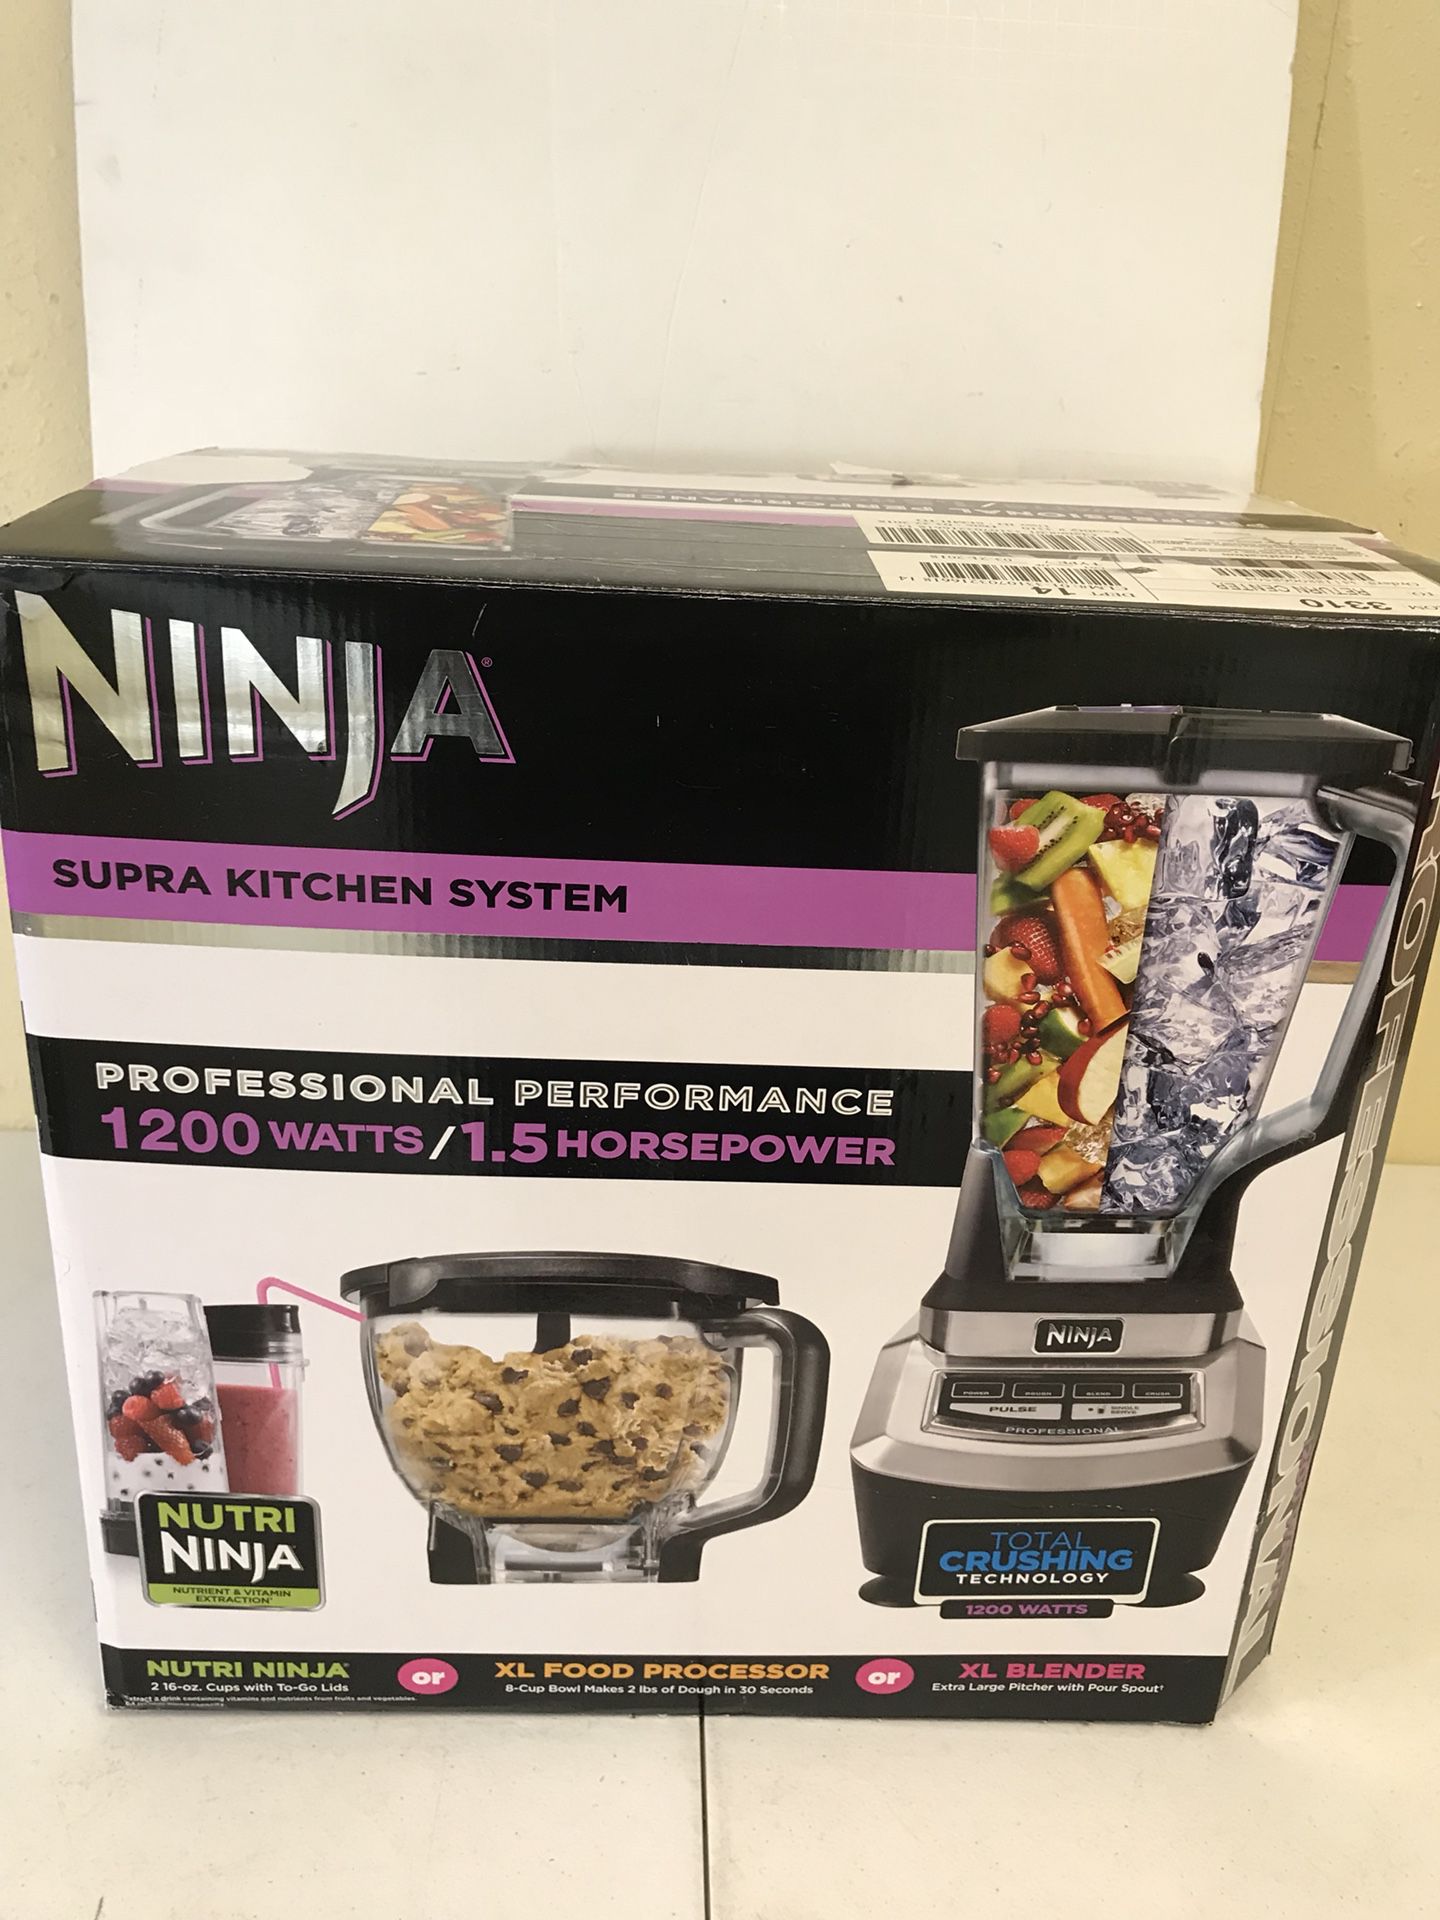  Ninja Supra Kitchen System 1200 watts: Electric